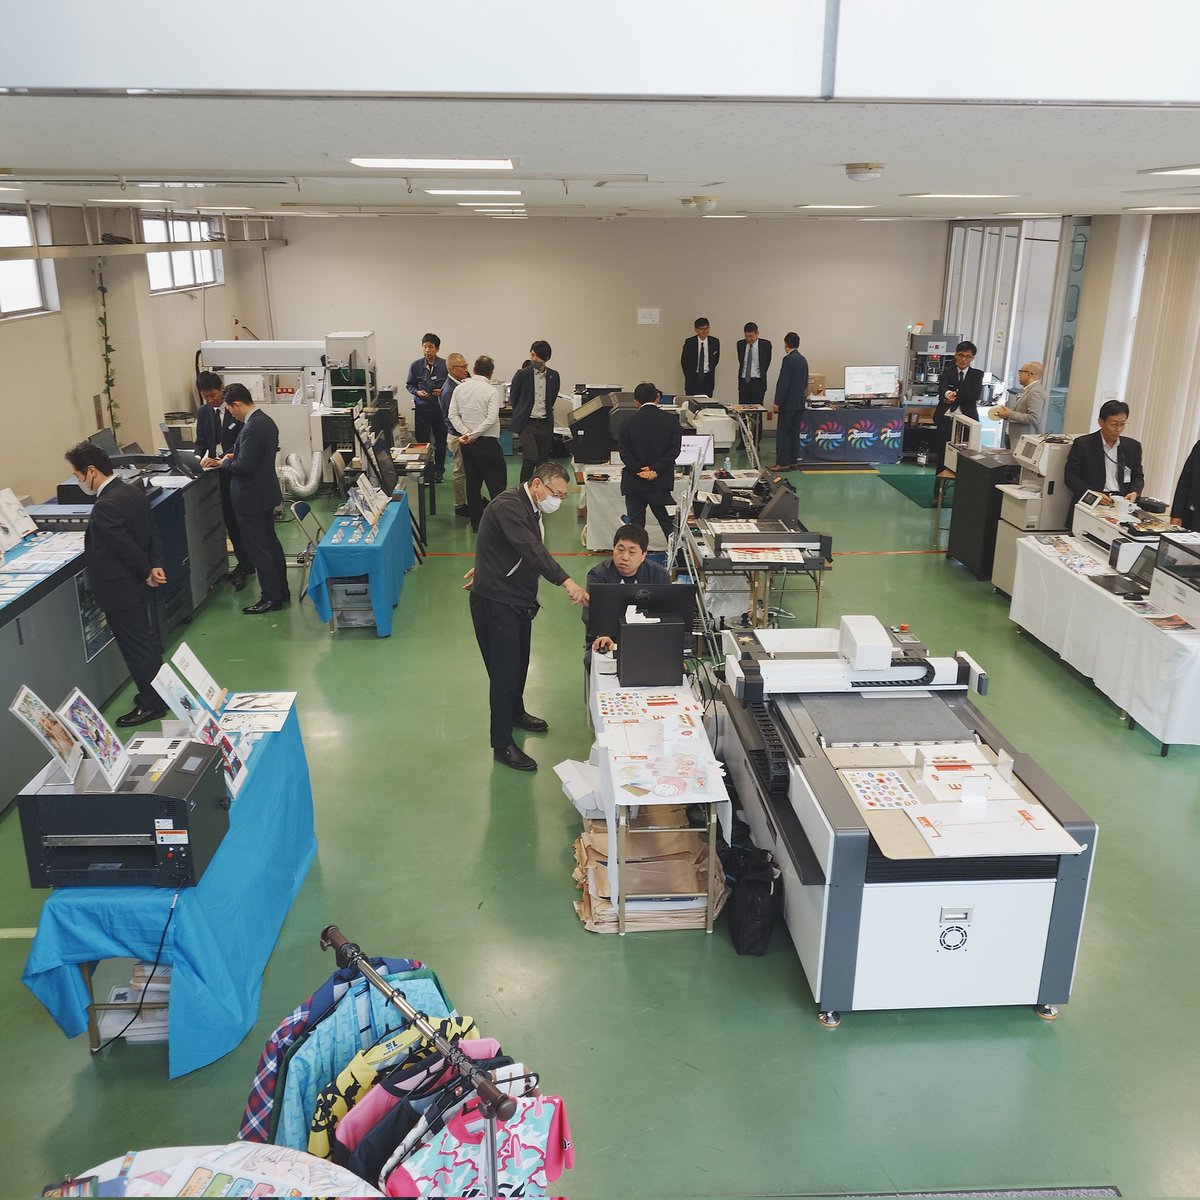 NextTrendShow in  #静岡！
光文堂さまのオフィスにて開催中です😊
大好きな地元での展示会、頑張ります(ง •̀_•́)ง